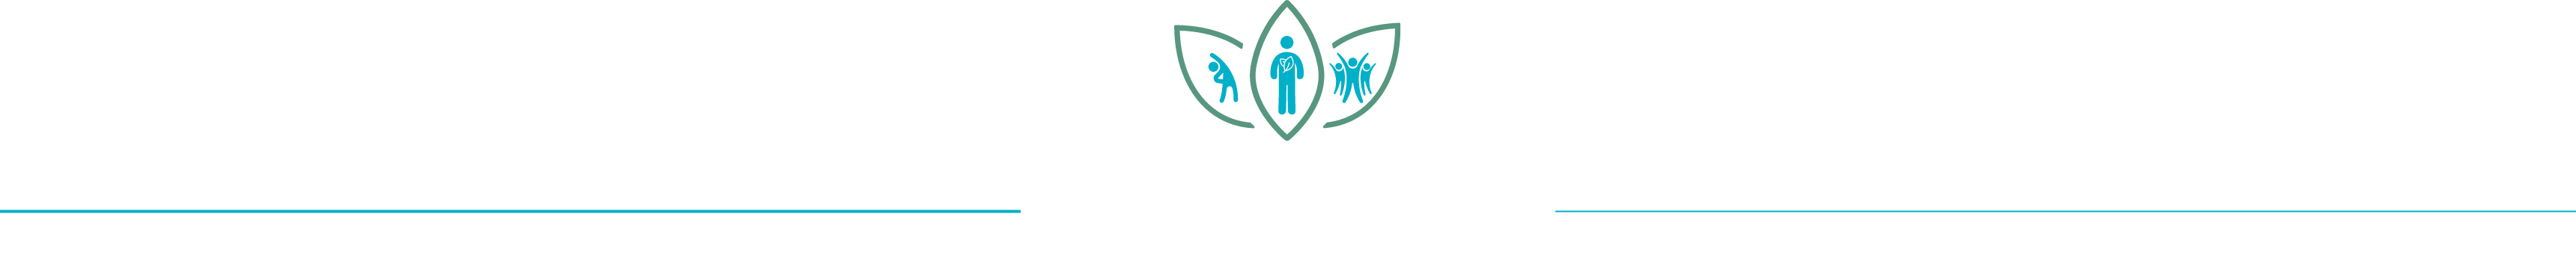 3-distinct-zons